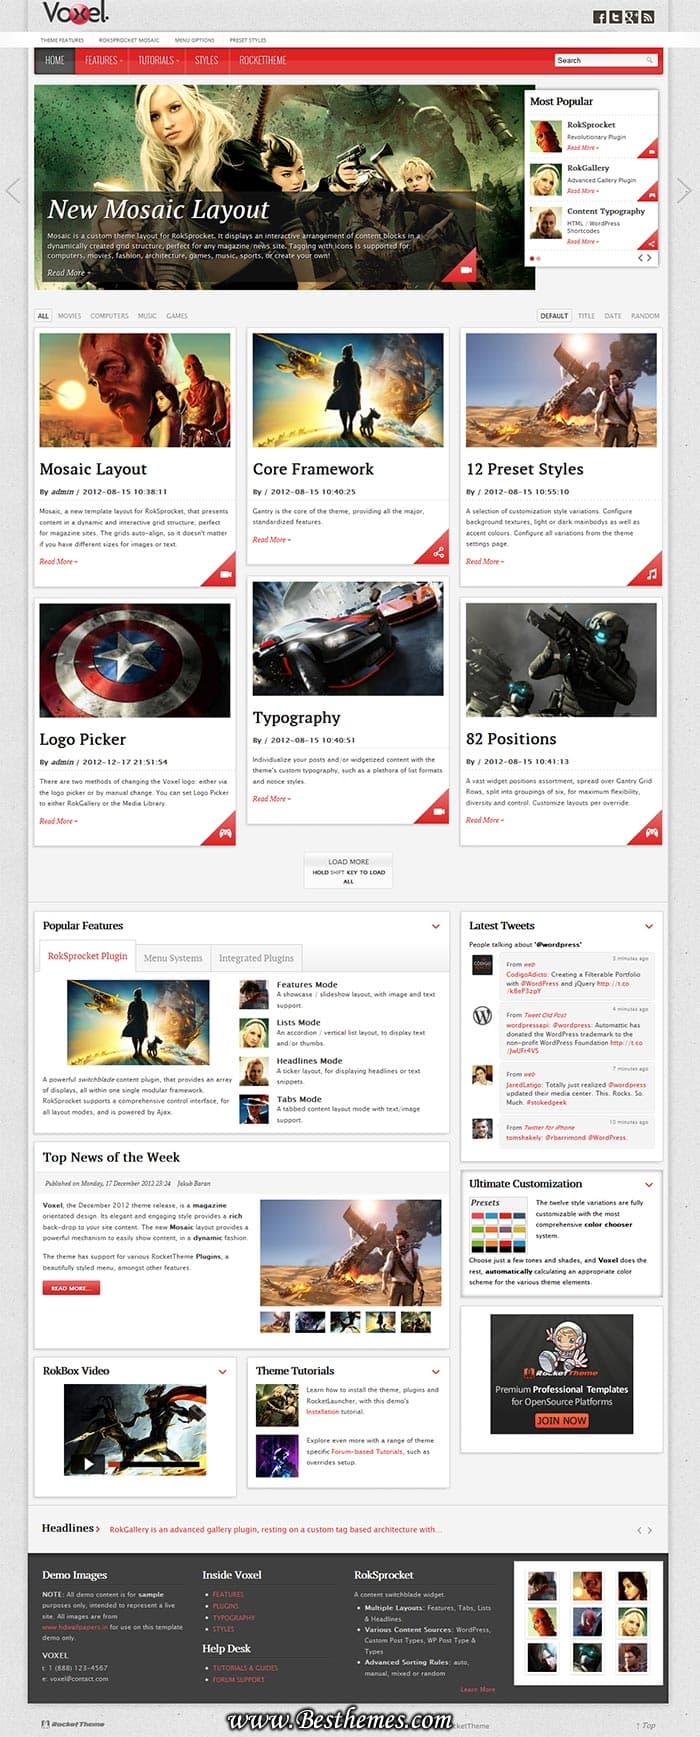  Voxel theme From Rocket Theme, Mobile Responsive WP Themes, Magazine Oriented WordPress design